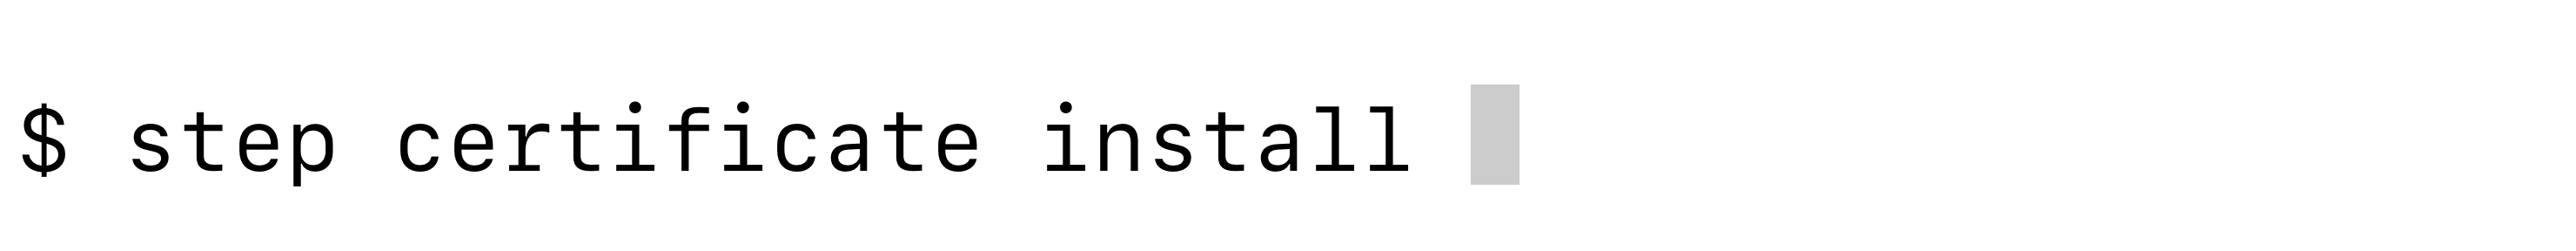 2019-02-25-step-cert-install-lb.png